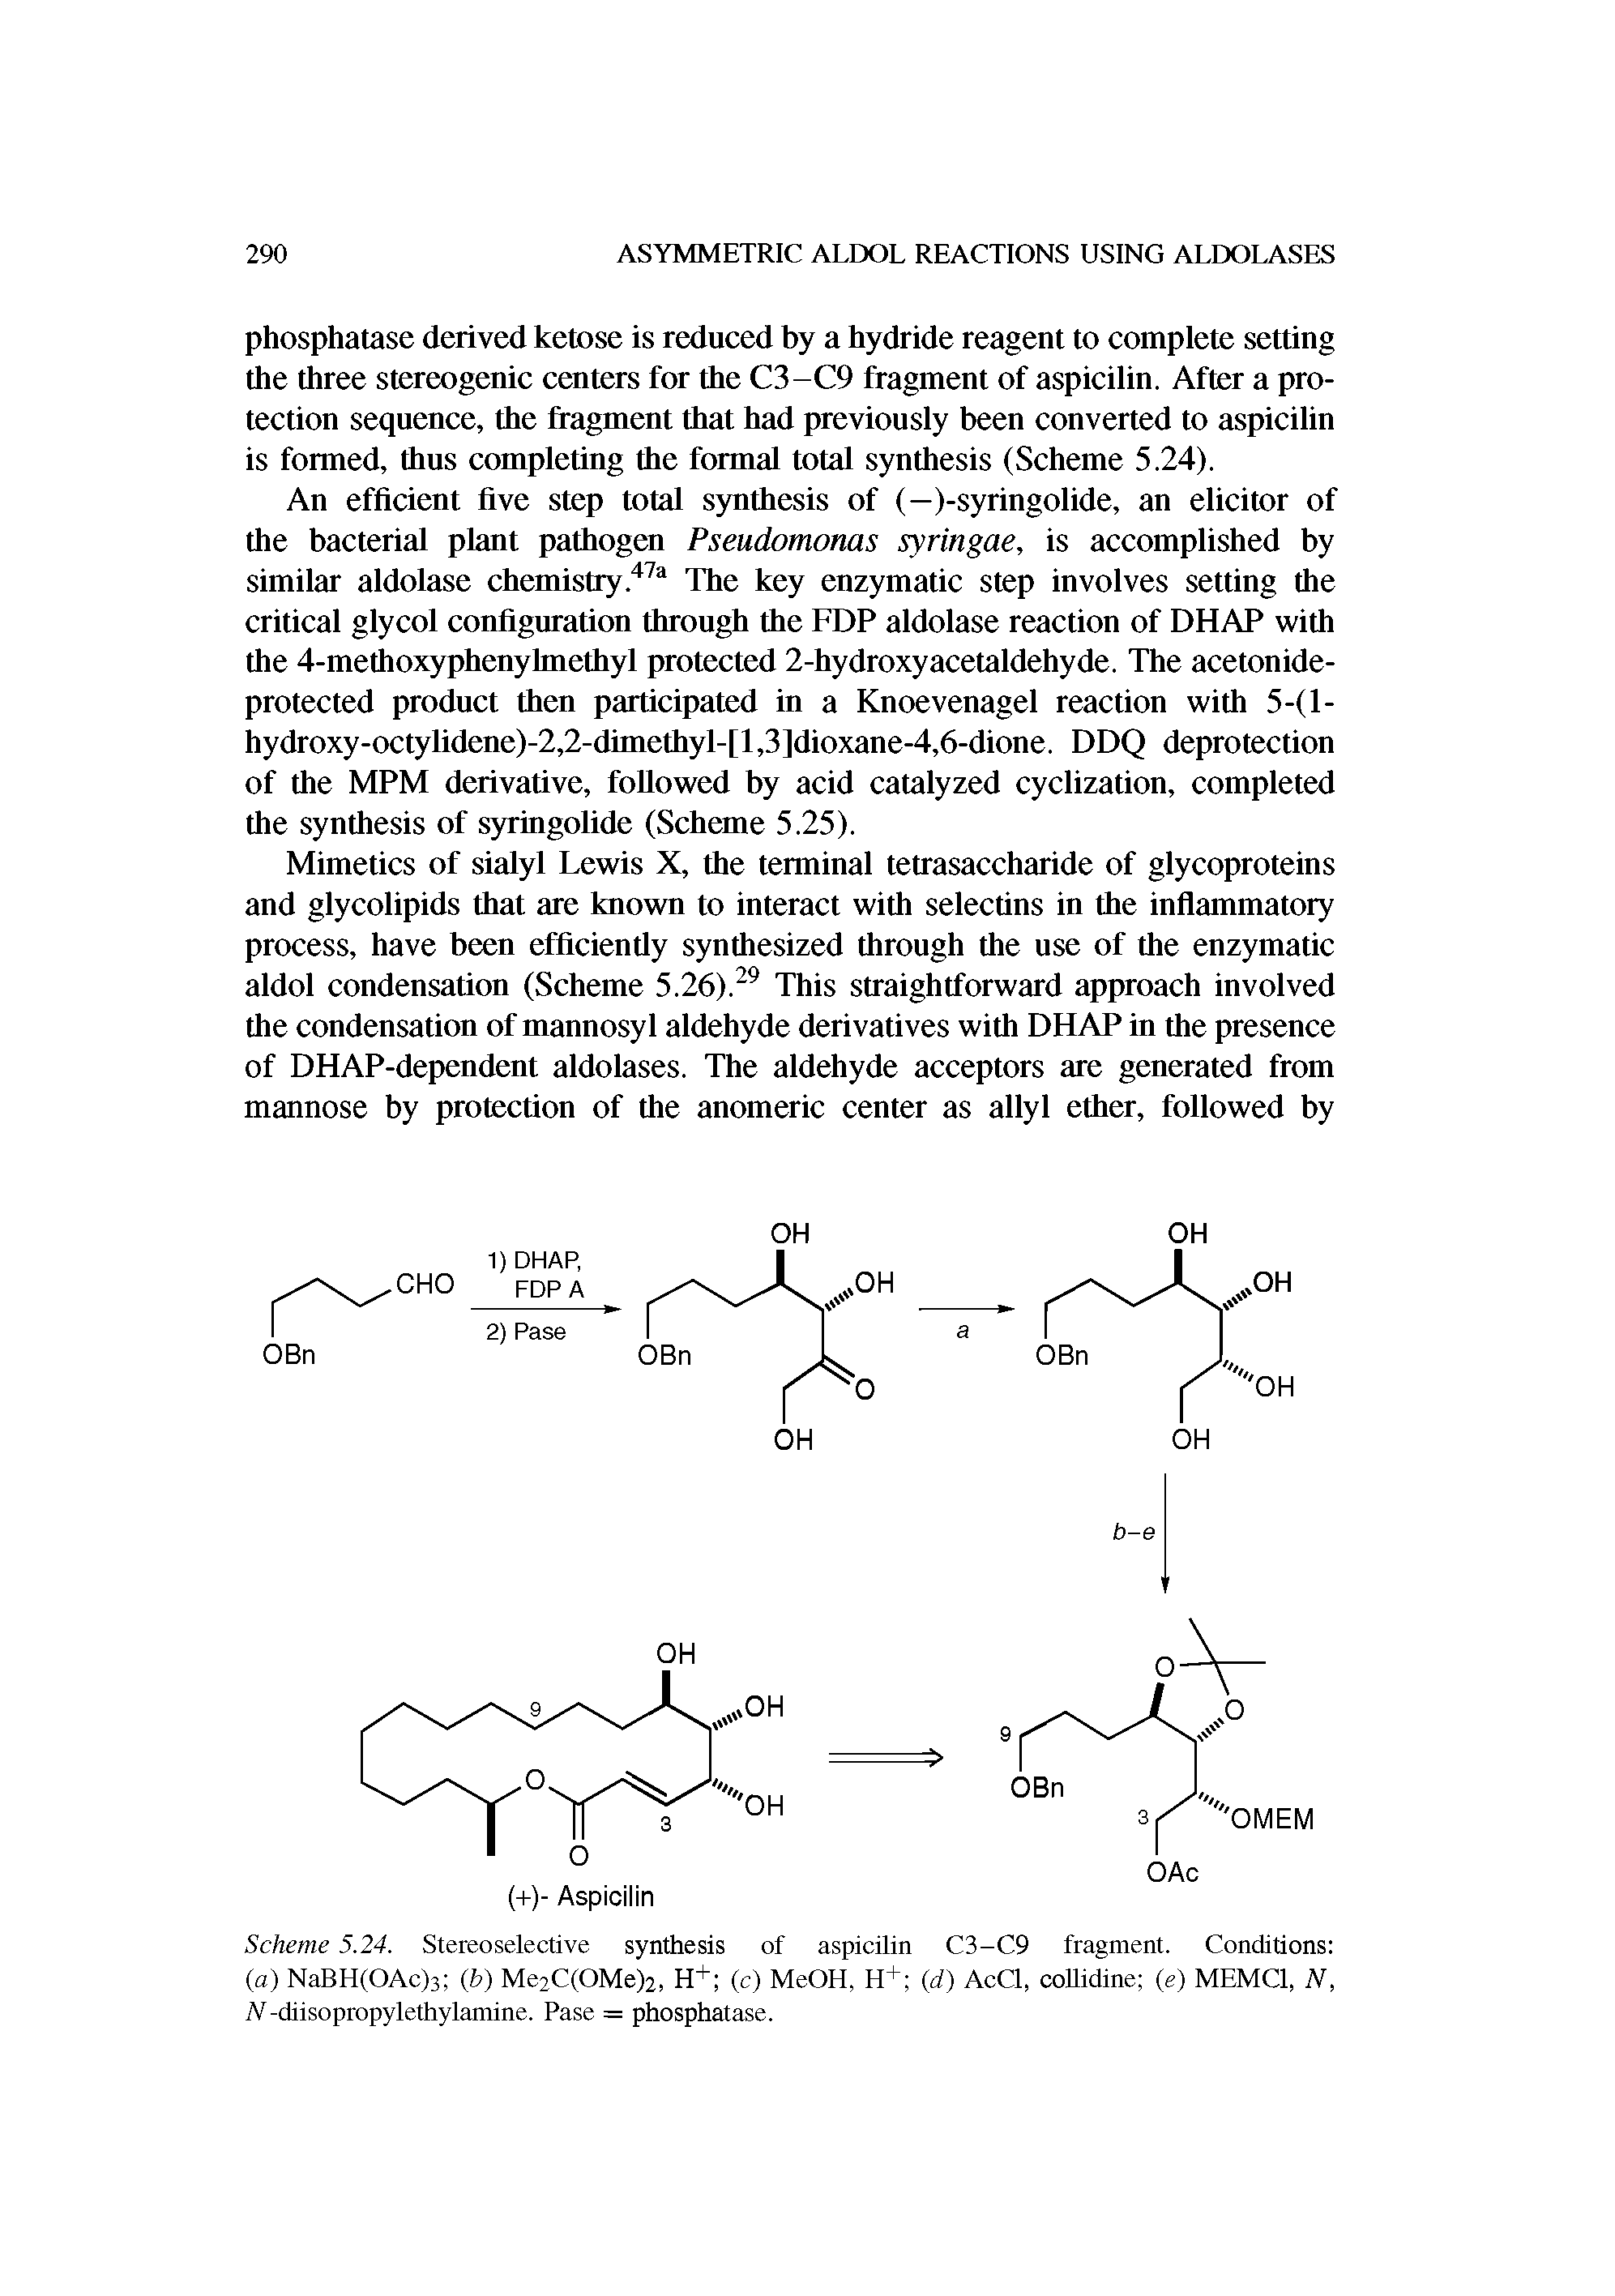 Scheme 5.24. Stereoselective synthesis of aspicilin C3-C9 fragment. Conditions (a) NaBH(OAc)3 (b) Me2C(OMe)2, H+ (c) MeOH, H+ (d) AcCl, collidine (e) MEM Cl, N, iV-diisopropylethylamine. Pase = phosphatase.